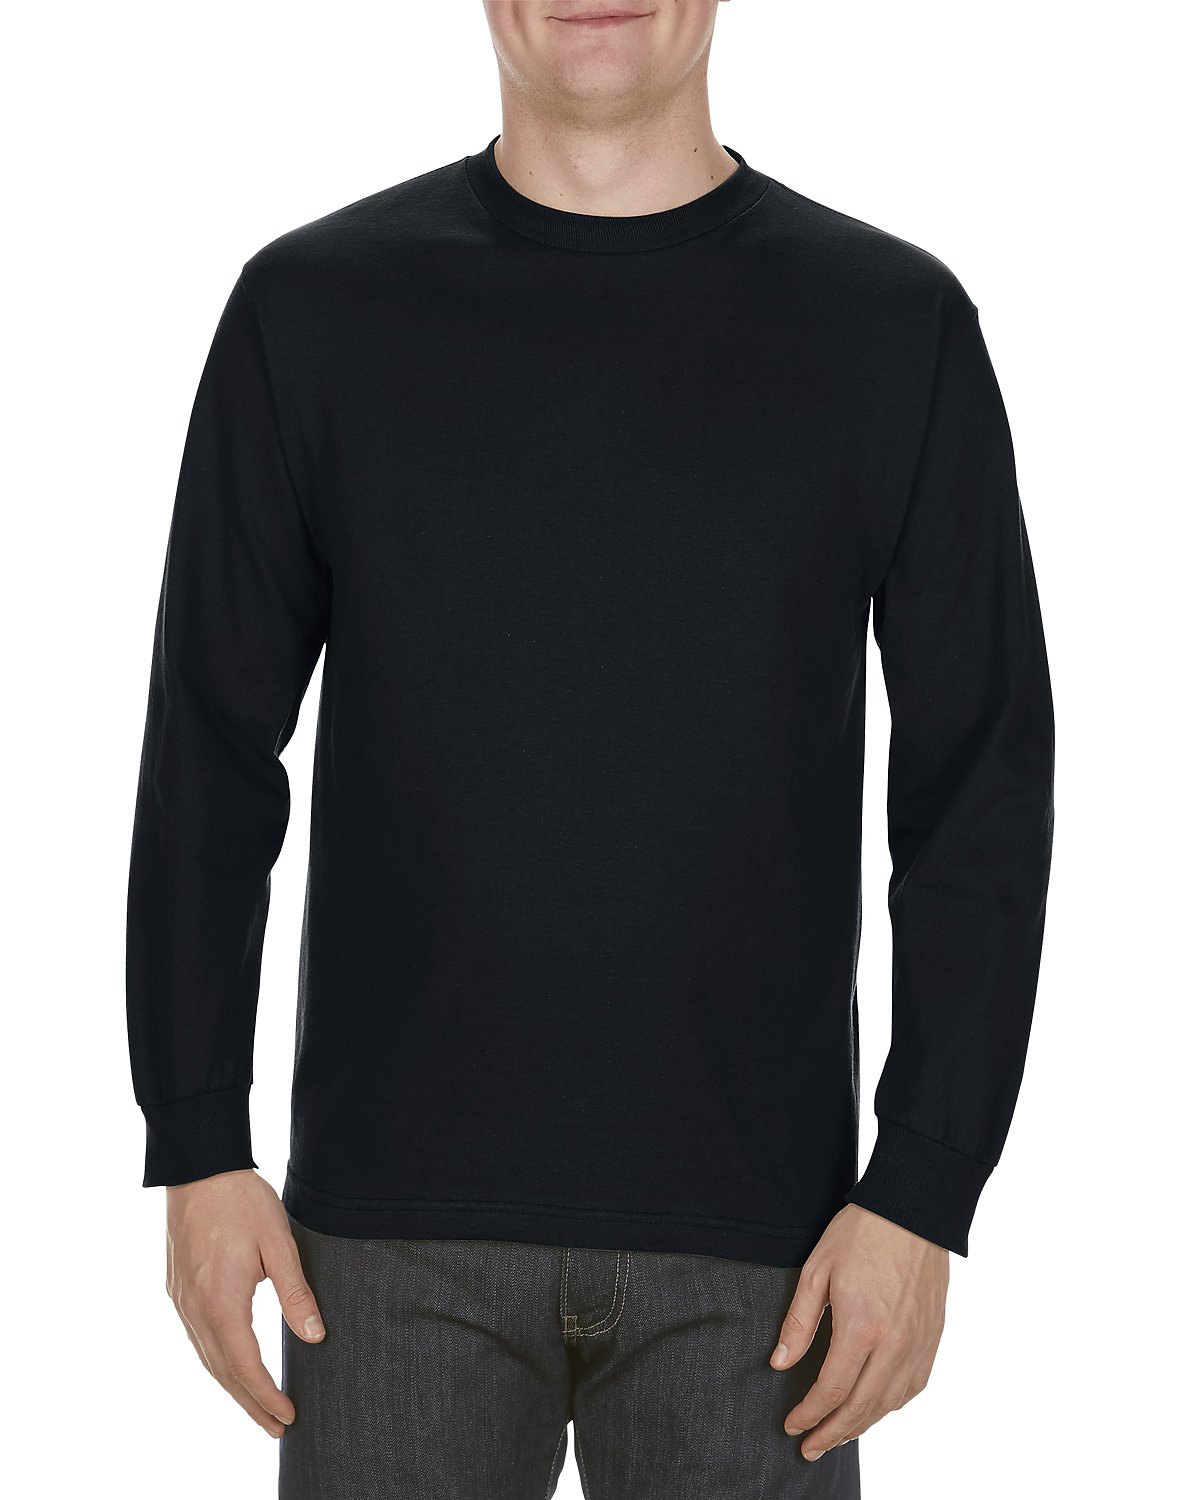 Alstyle Apparel 1304 AAA Long Sleeve T-Shirt - Black